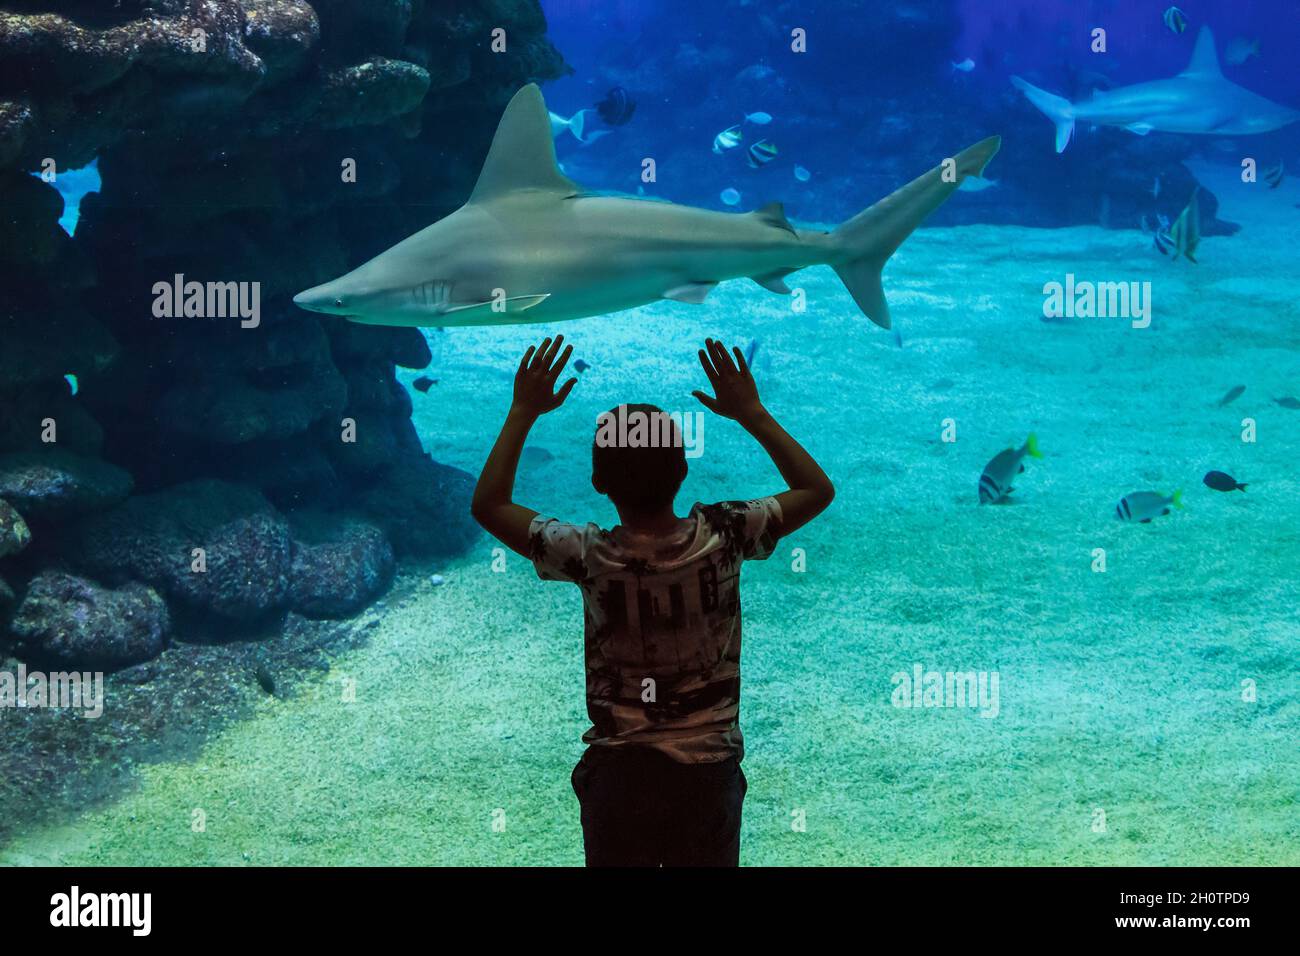 EILAT, ISRAEL - SEPTEMBER 21, 2017: An unidentified boy gets acquainted with an ocean dweller shark in the Oceanarium. Stock Photo